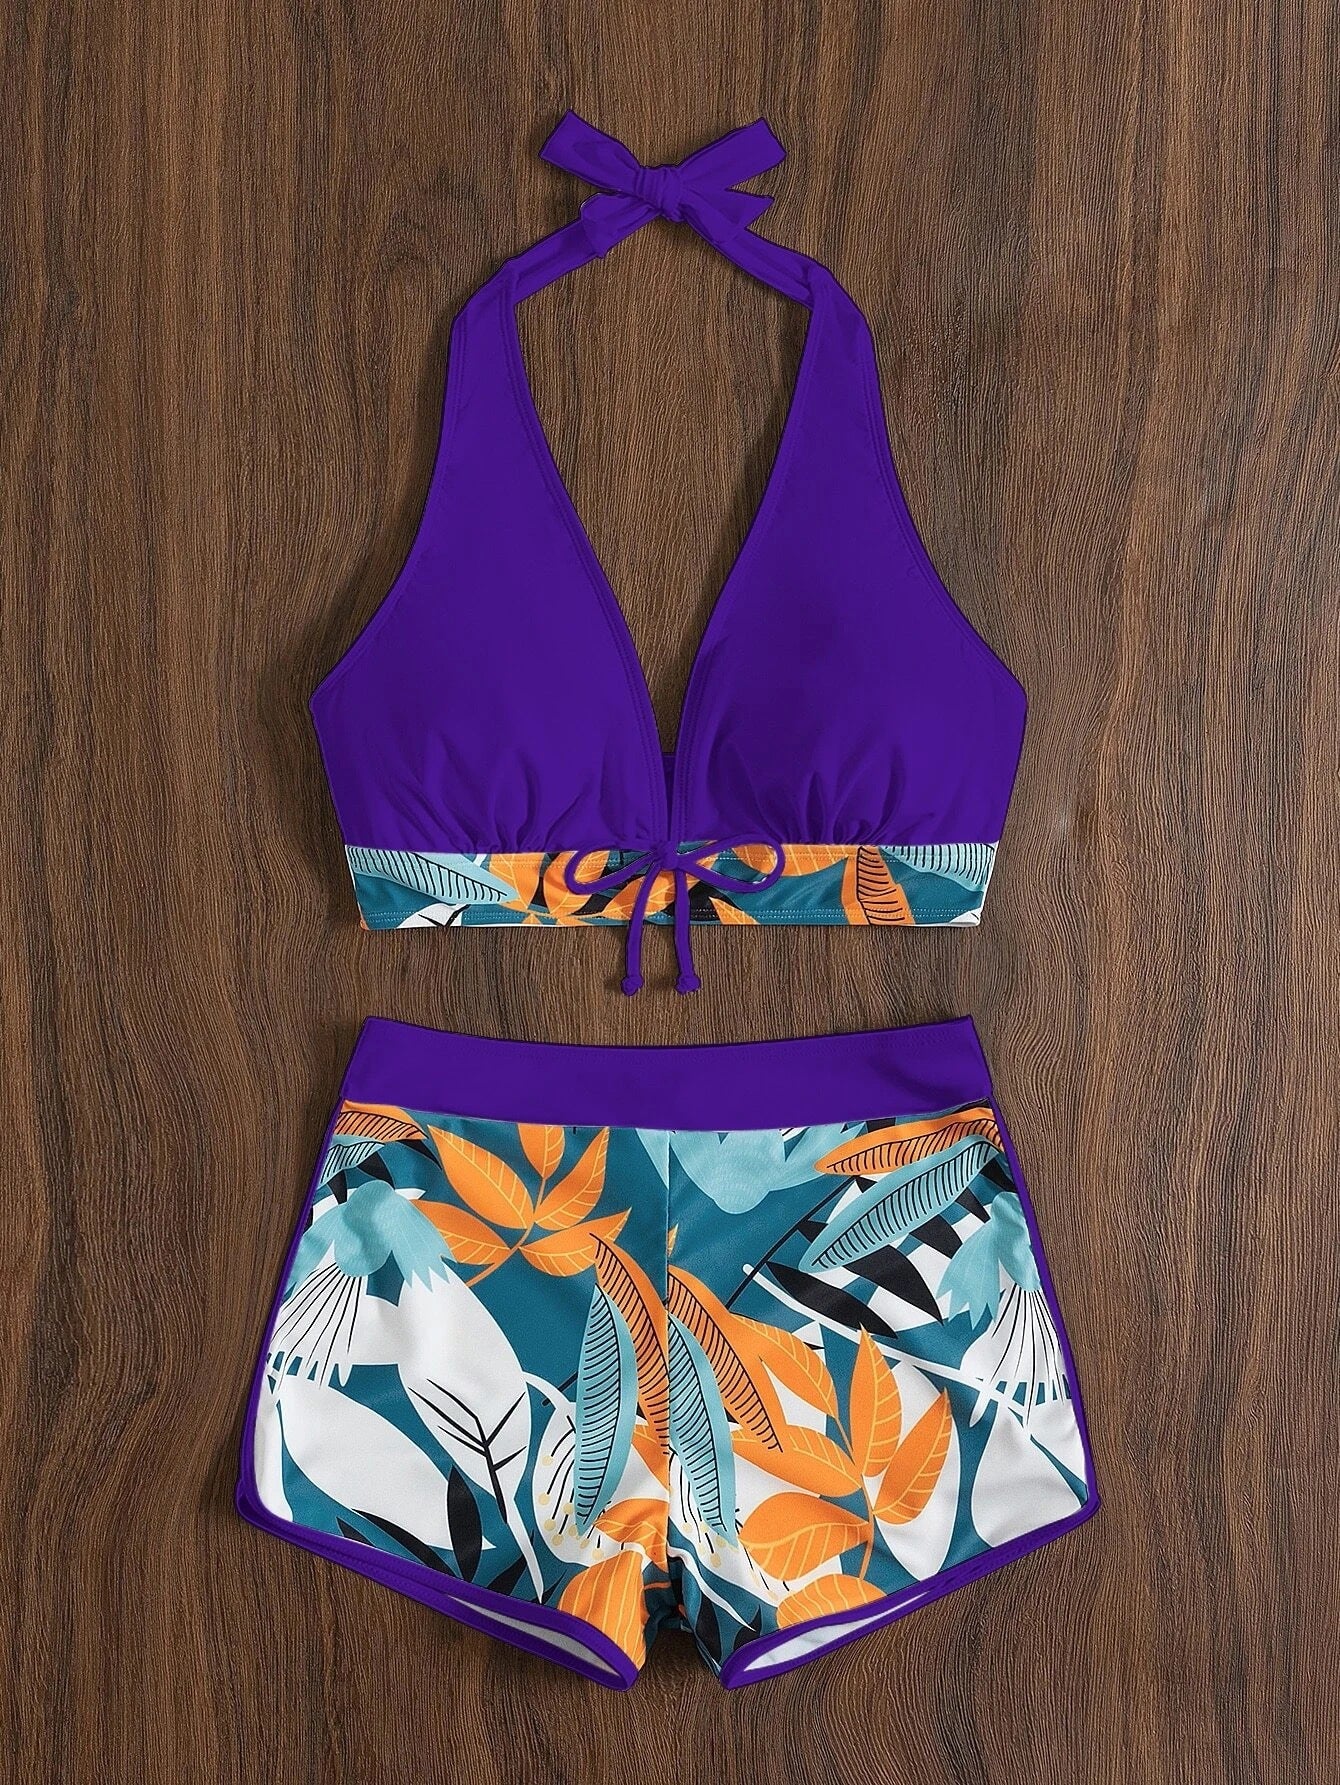 Split High Waist Boxer Lace Printing Solid Color Stitching Bikini